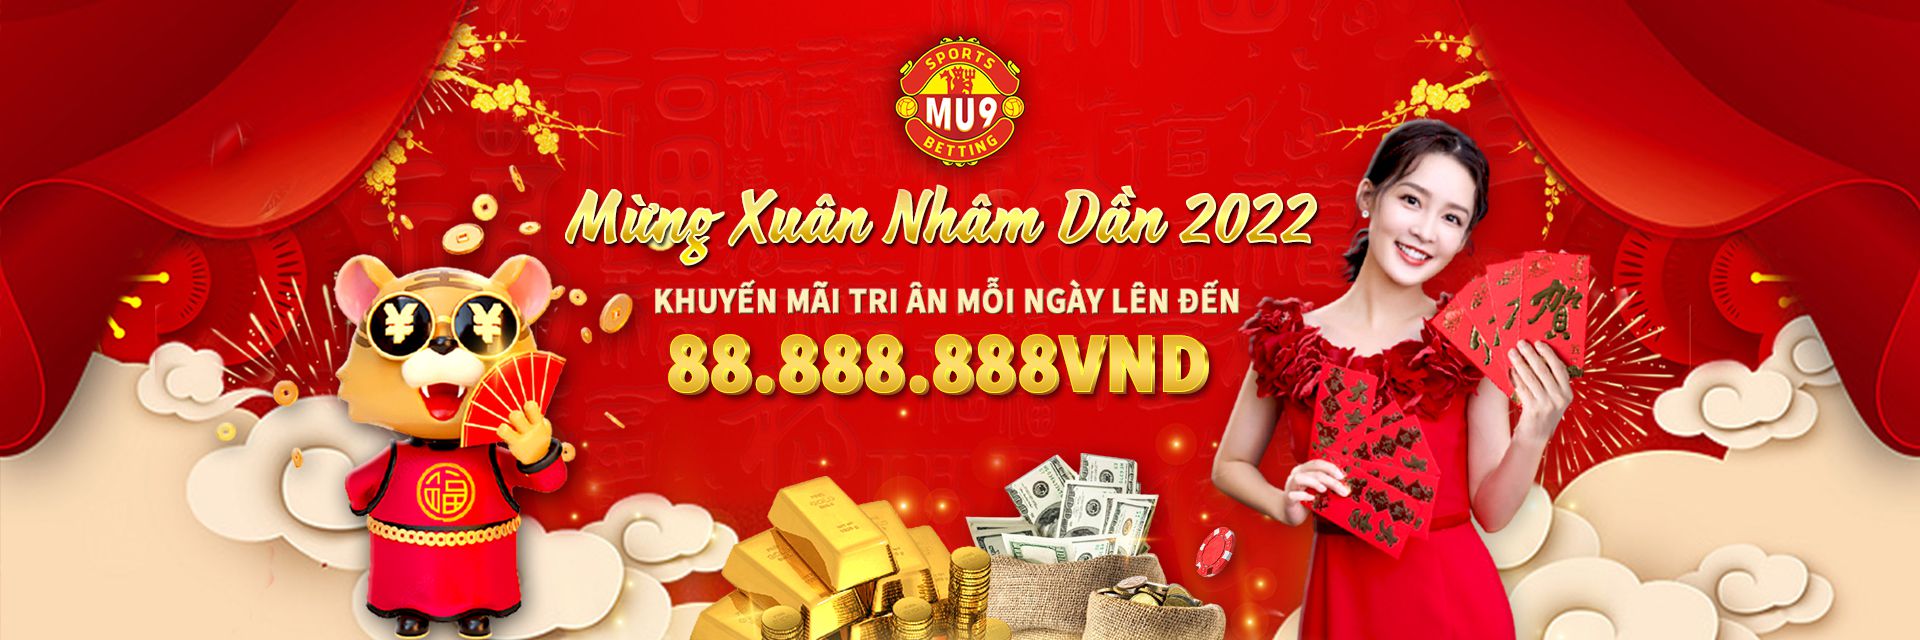 mu9 casino image 1